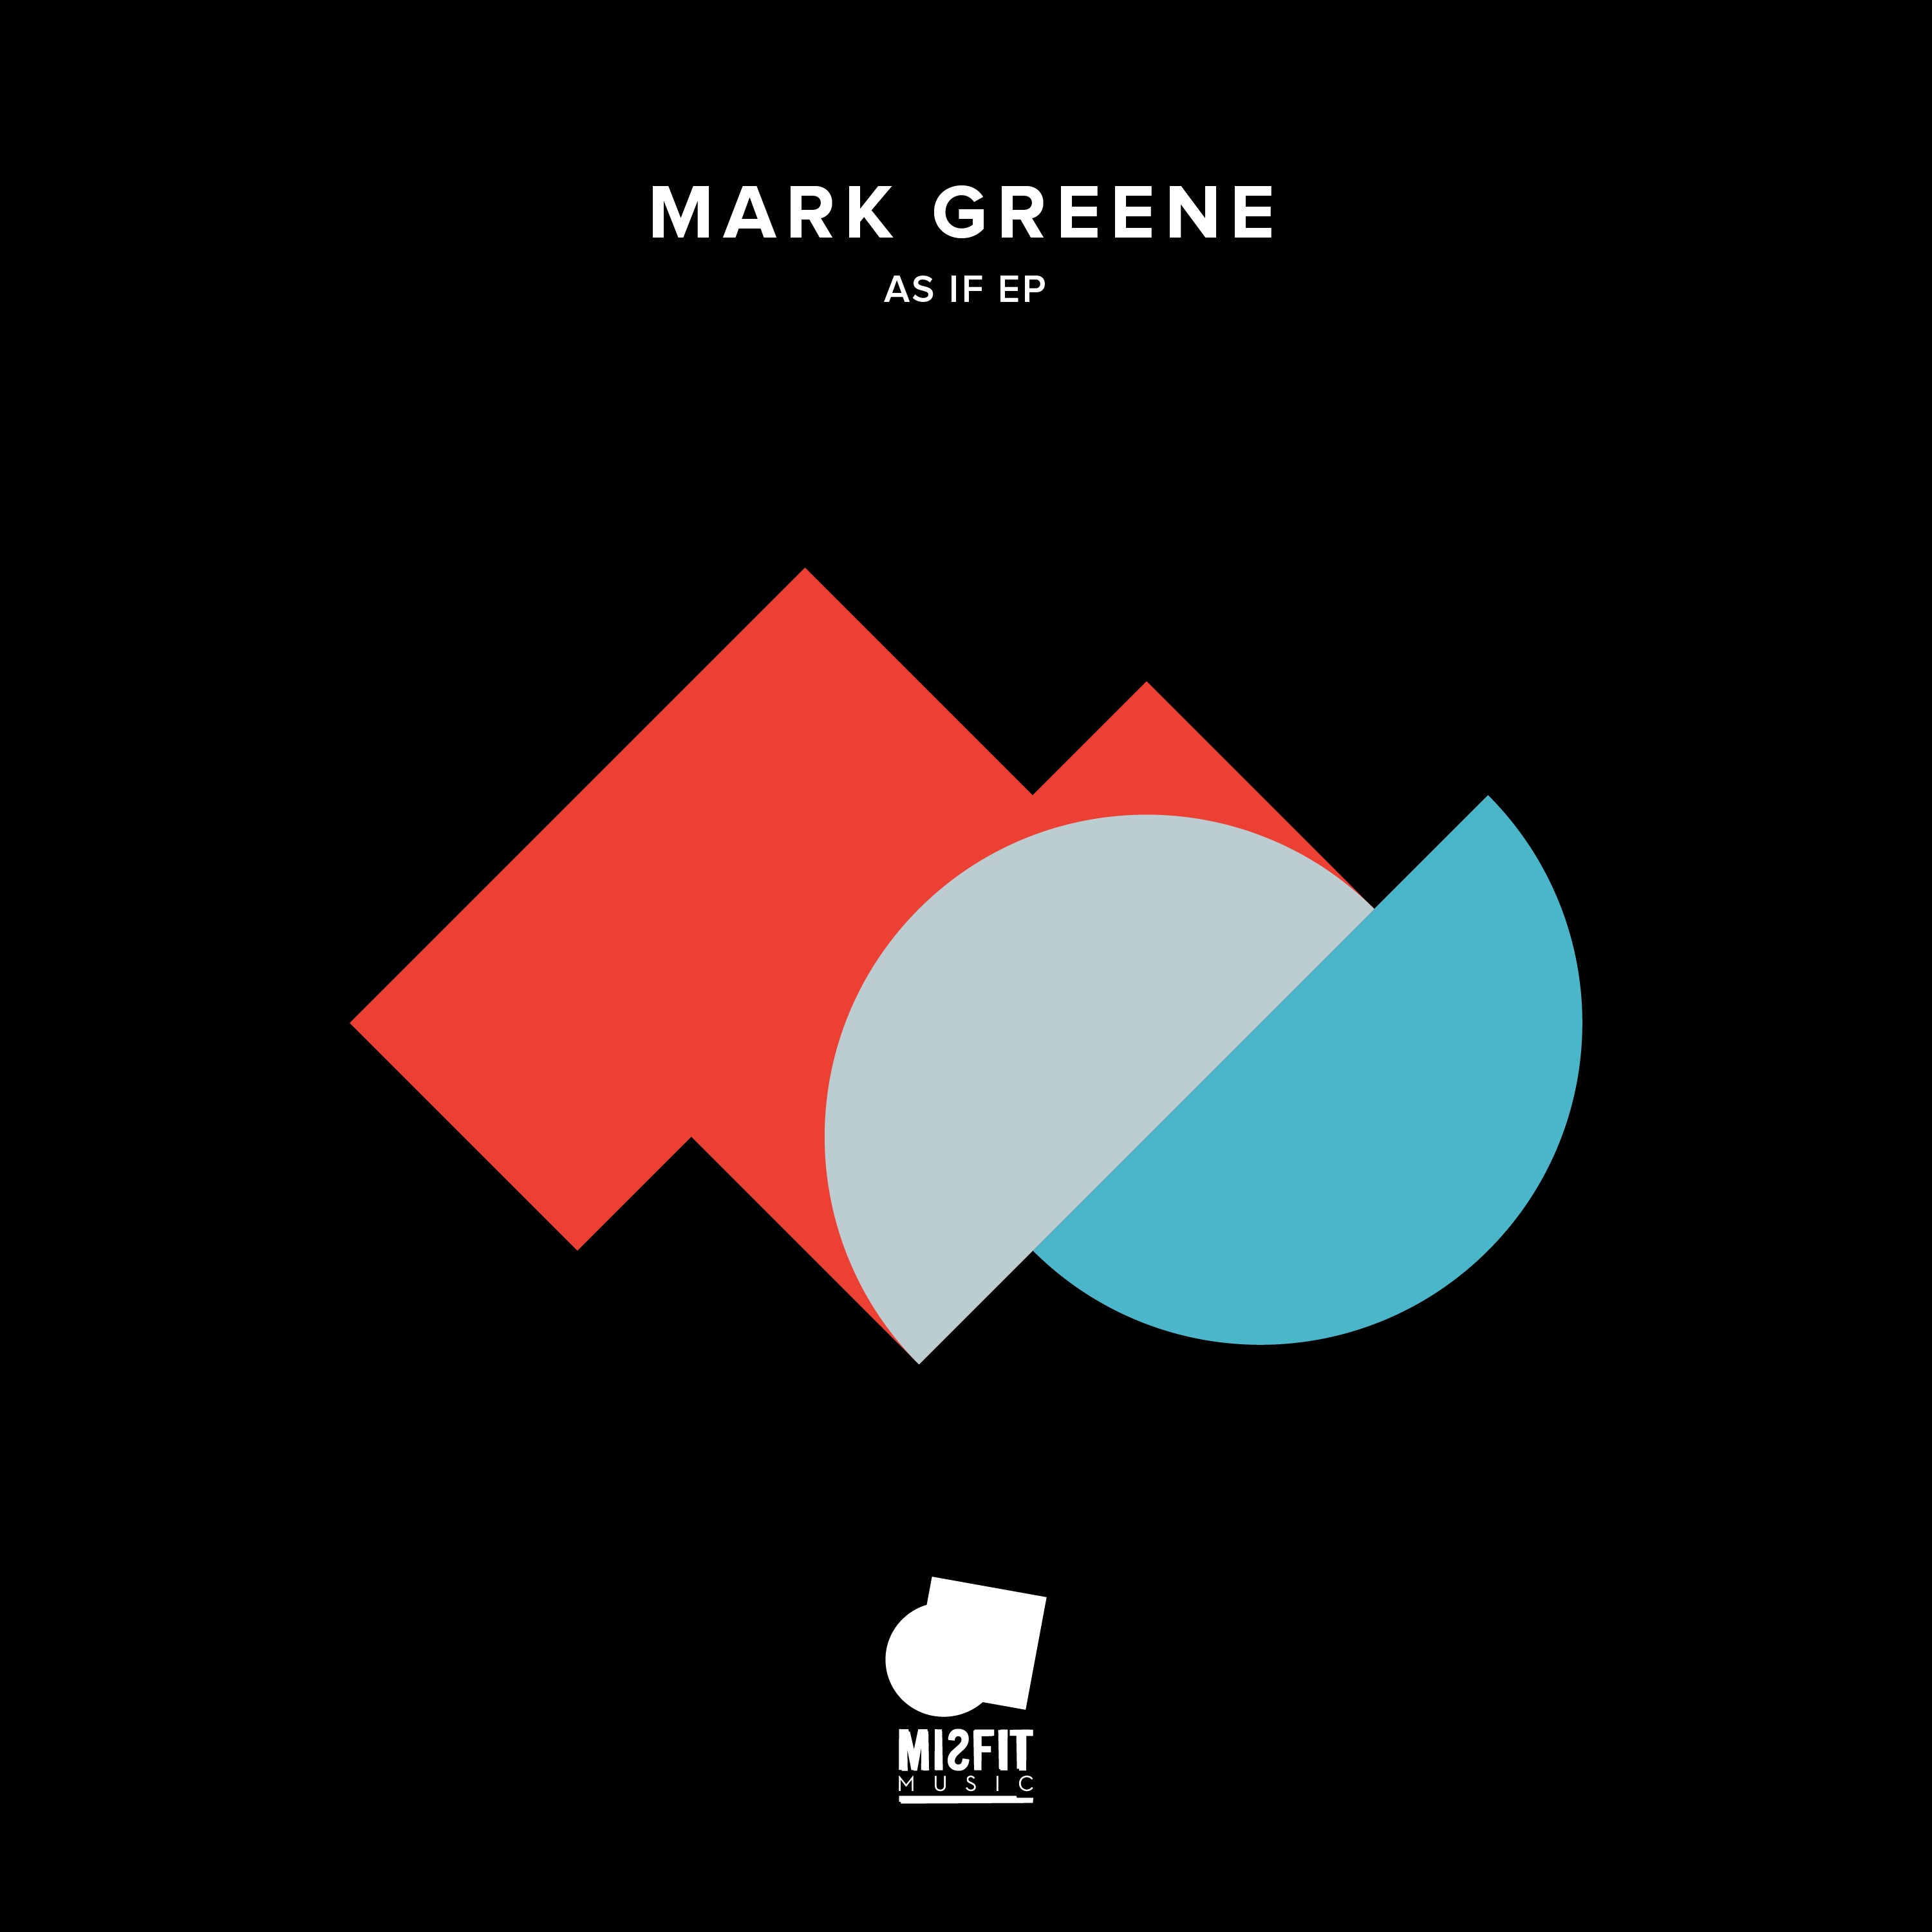 डाउनलोड करा Mark Greene - As If